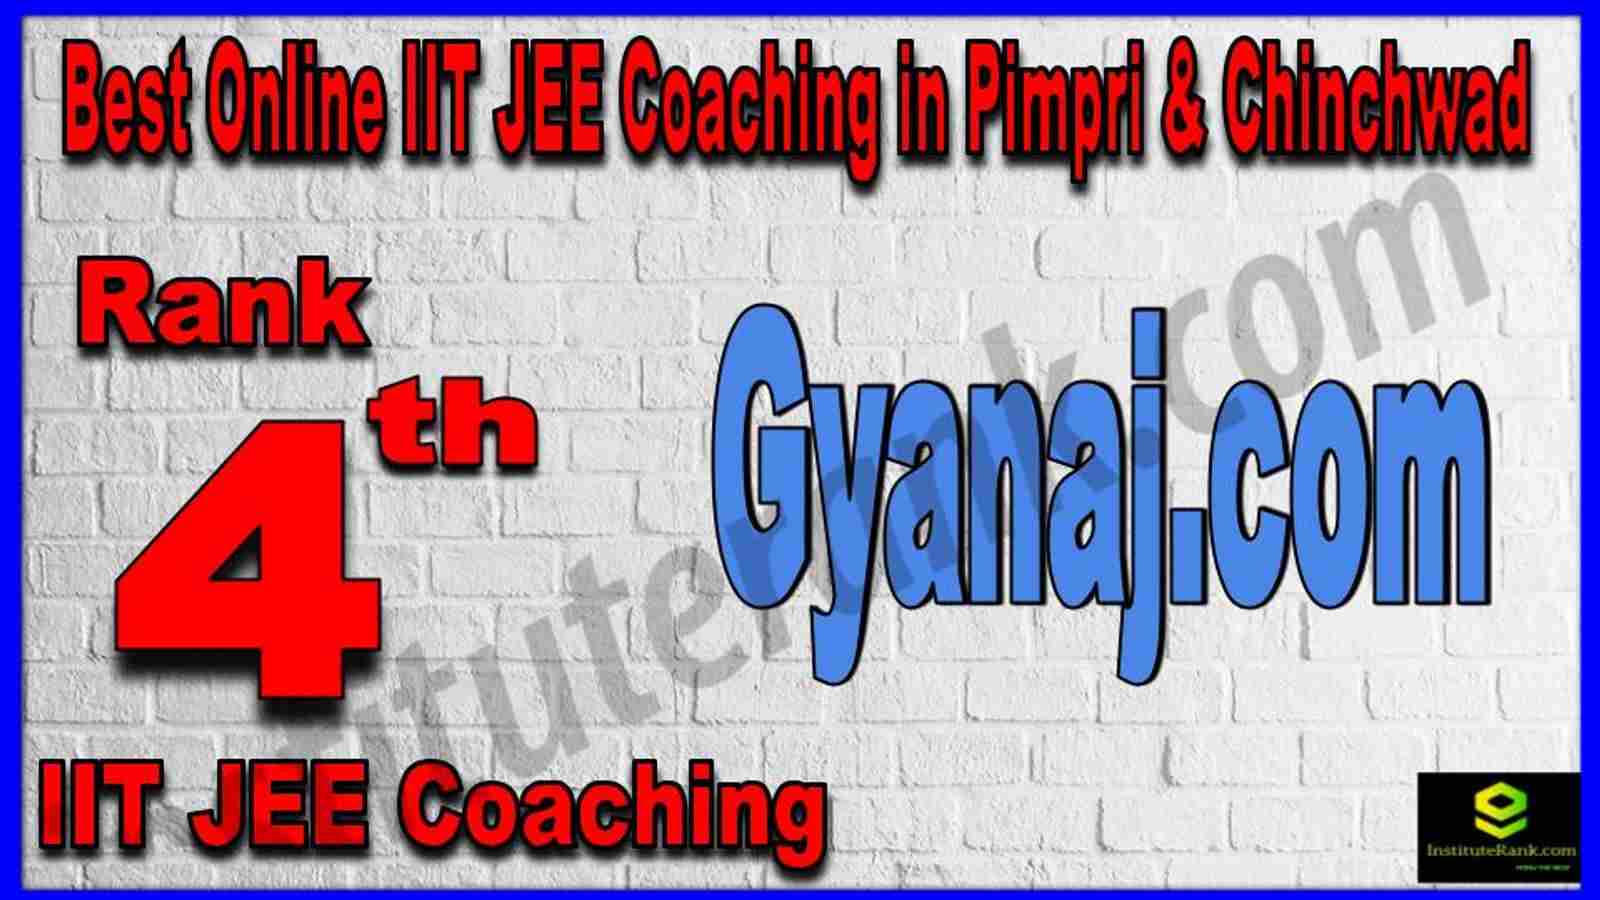 Rank 4th Best Online IIT JEE Coaching in Pimpri & Chinchwad